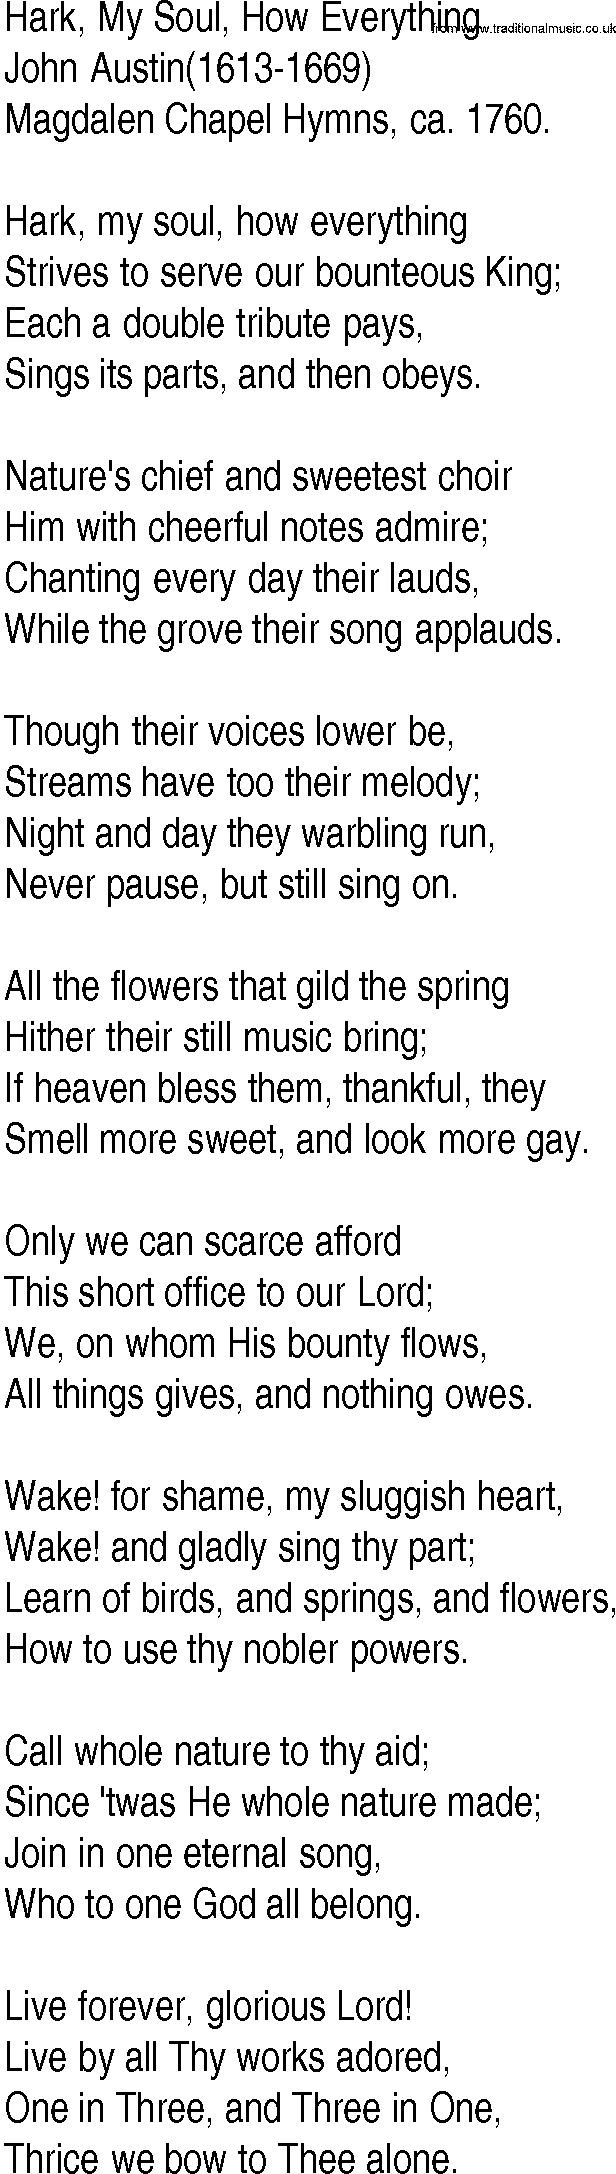 Hymn and Gospel Song: Hark, My Soul, How Everything by John Austin lyrics